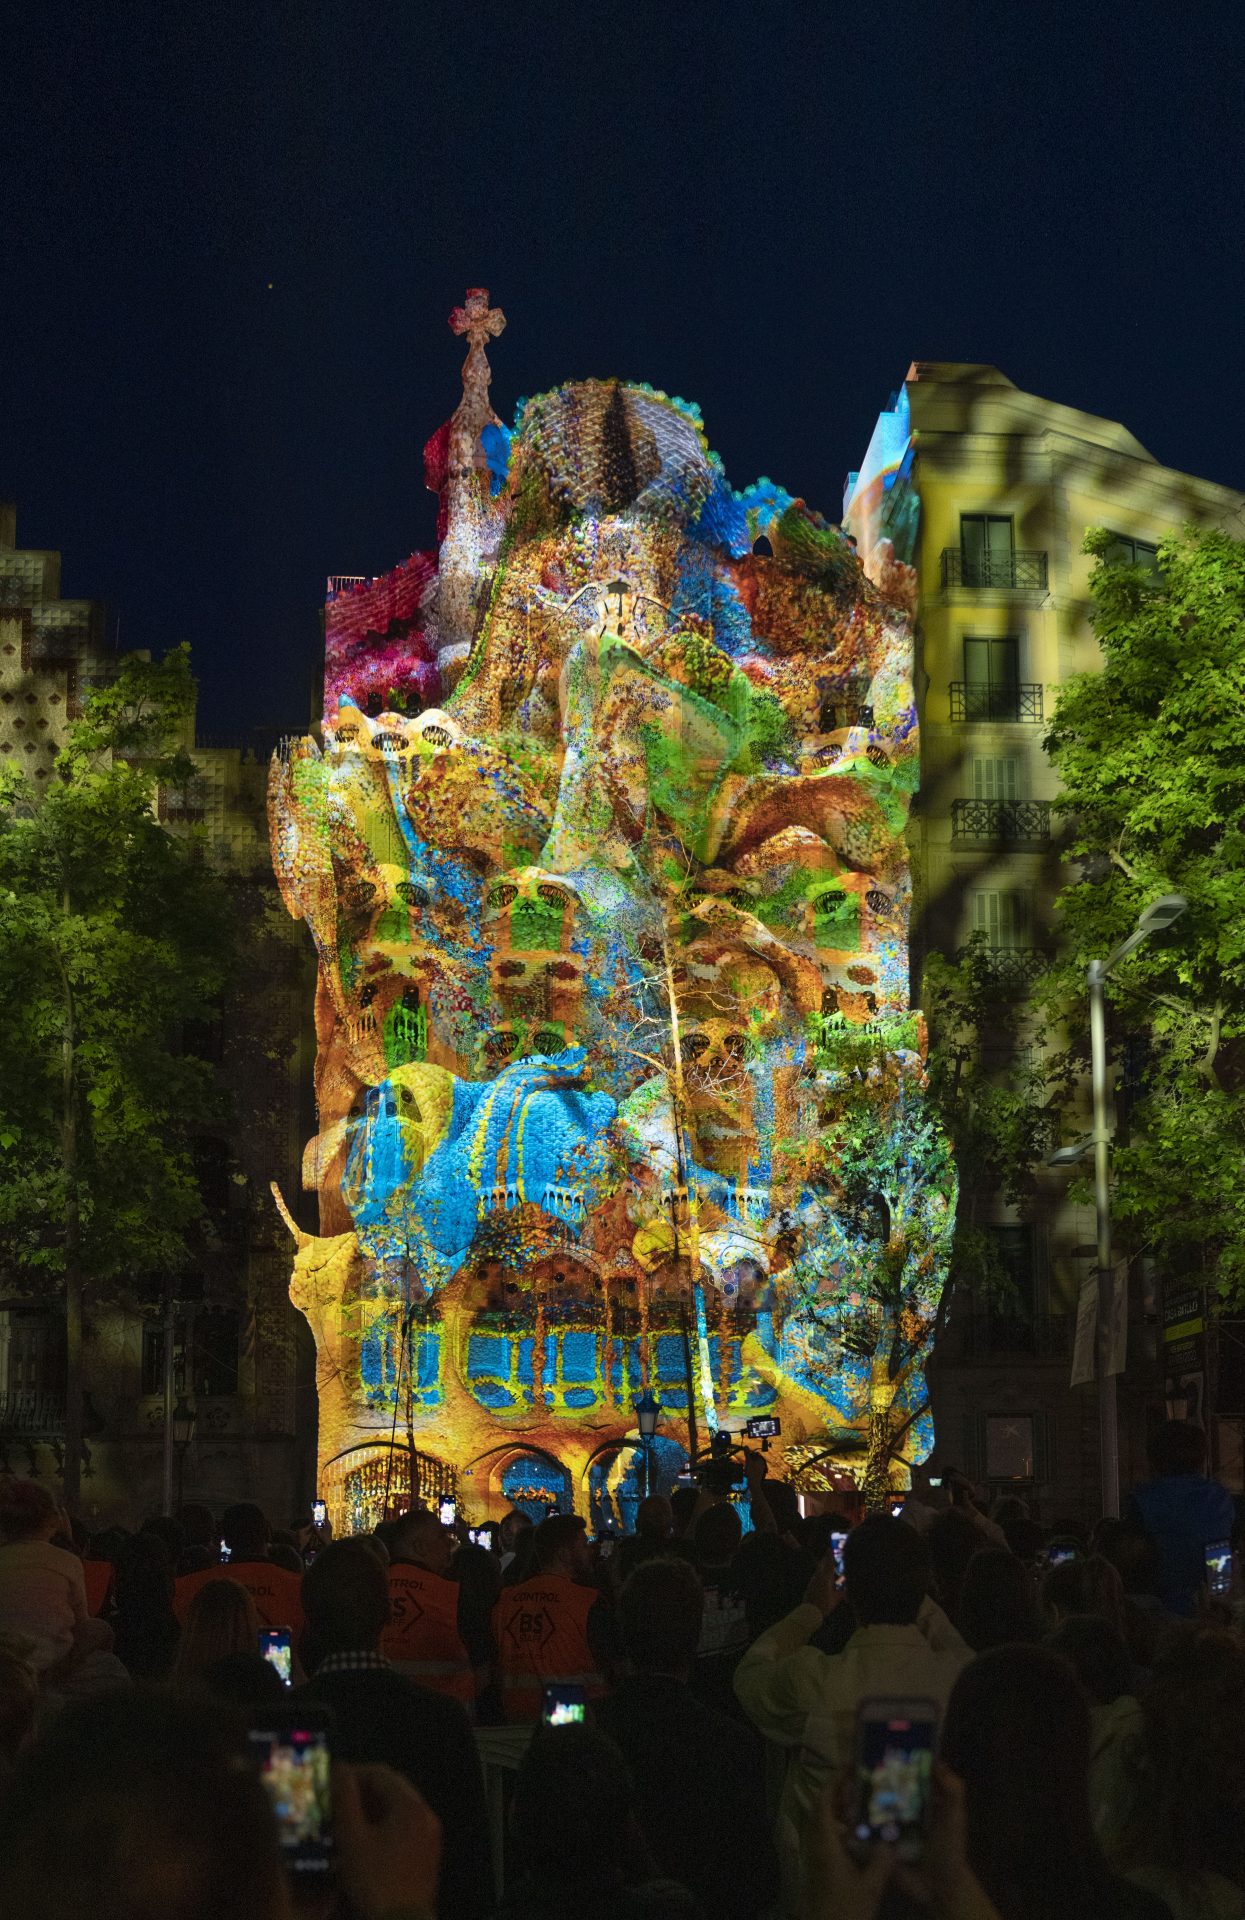 Digital Artist Refik Anadol Lit Up the Facade of Gaudí’s Casa Batlló